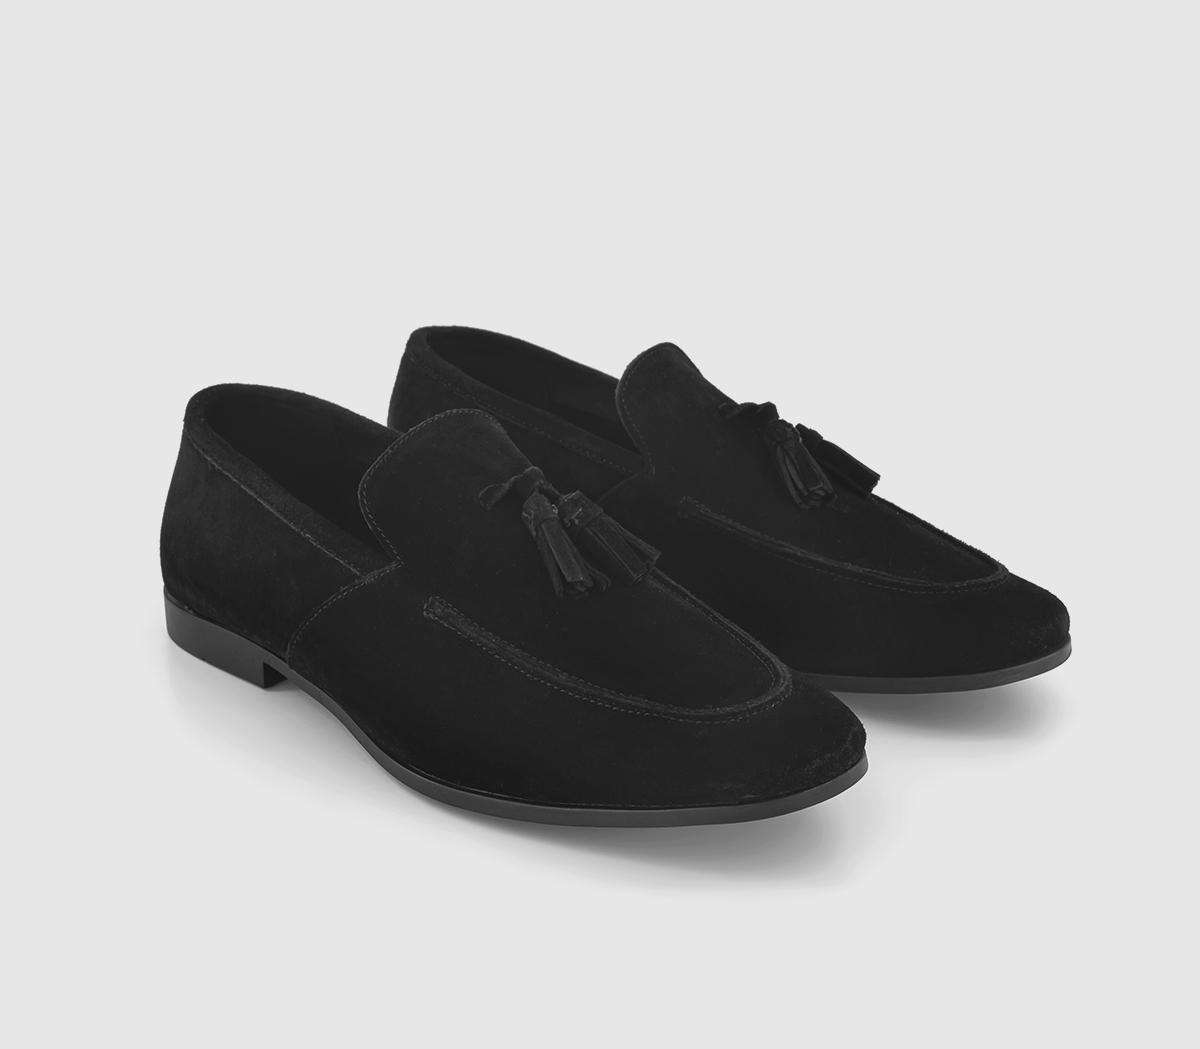 OFFICE Memming Tassel Loafers Black Suede - Men’s Loafers